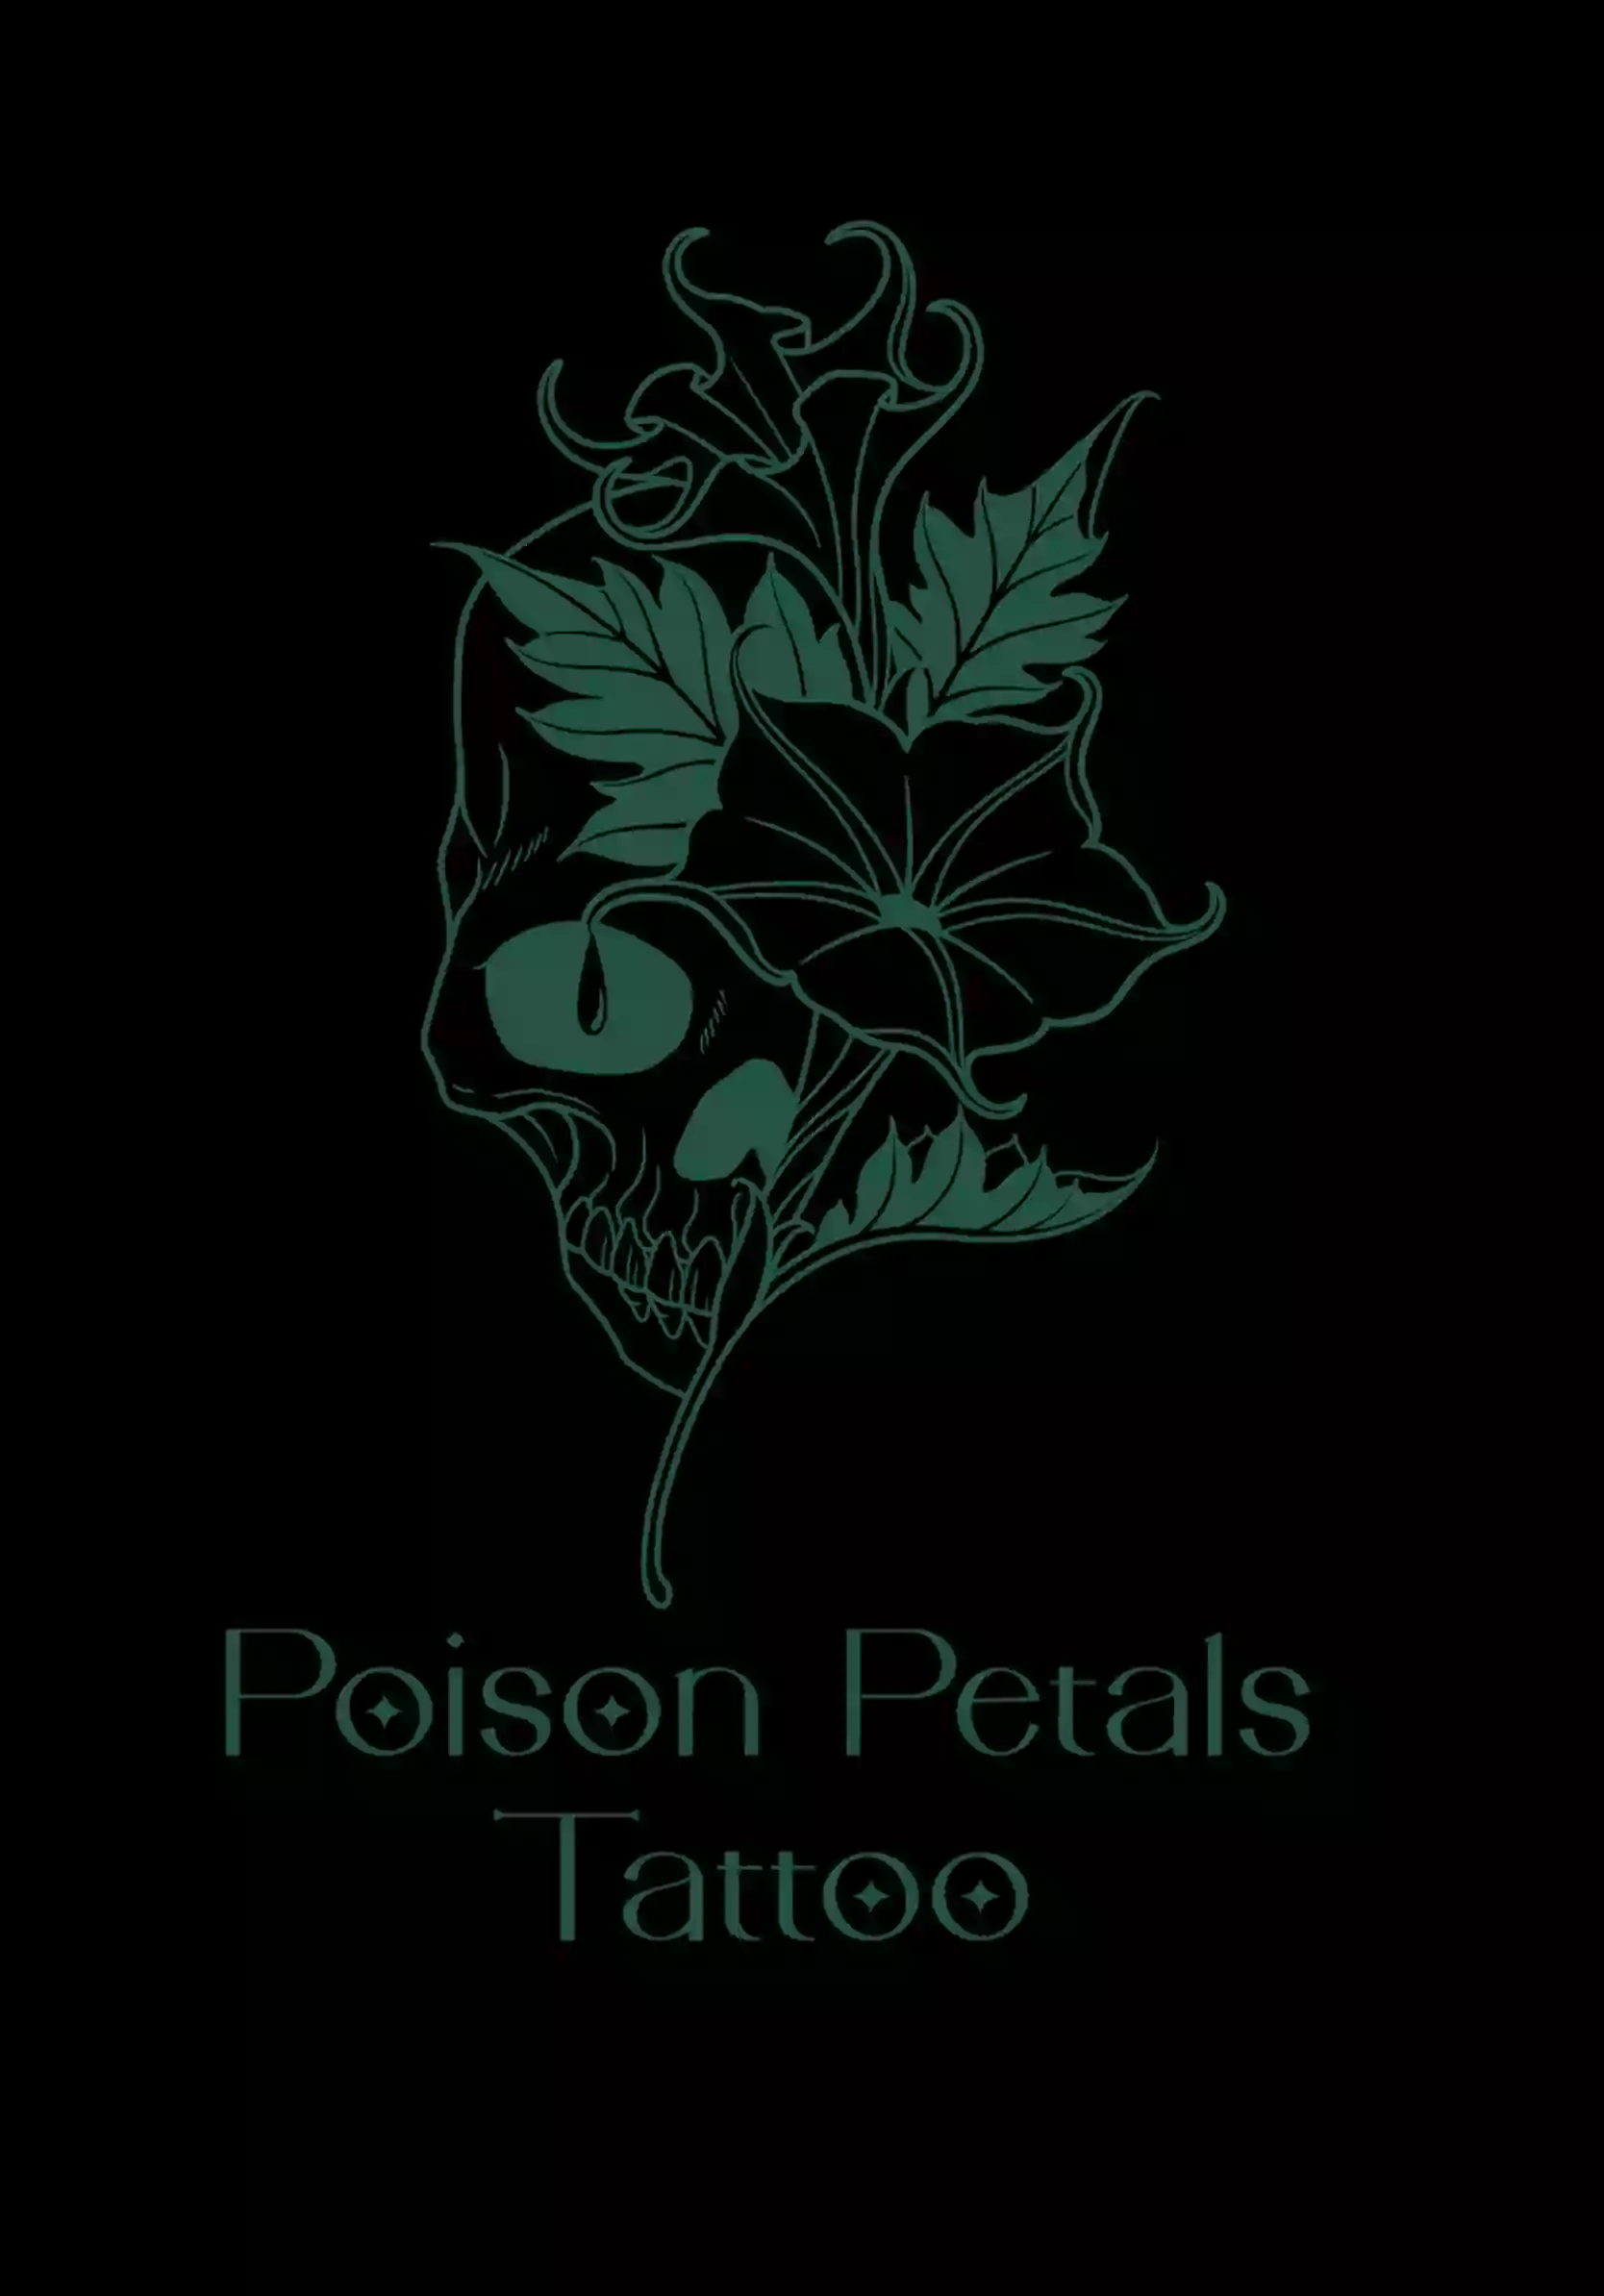 Poison Petals Tattoo